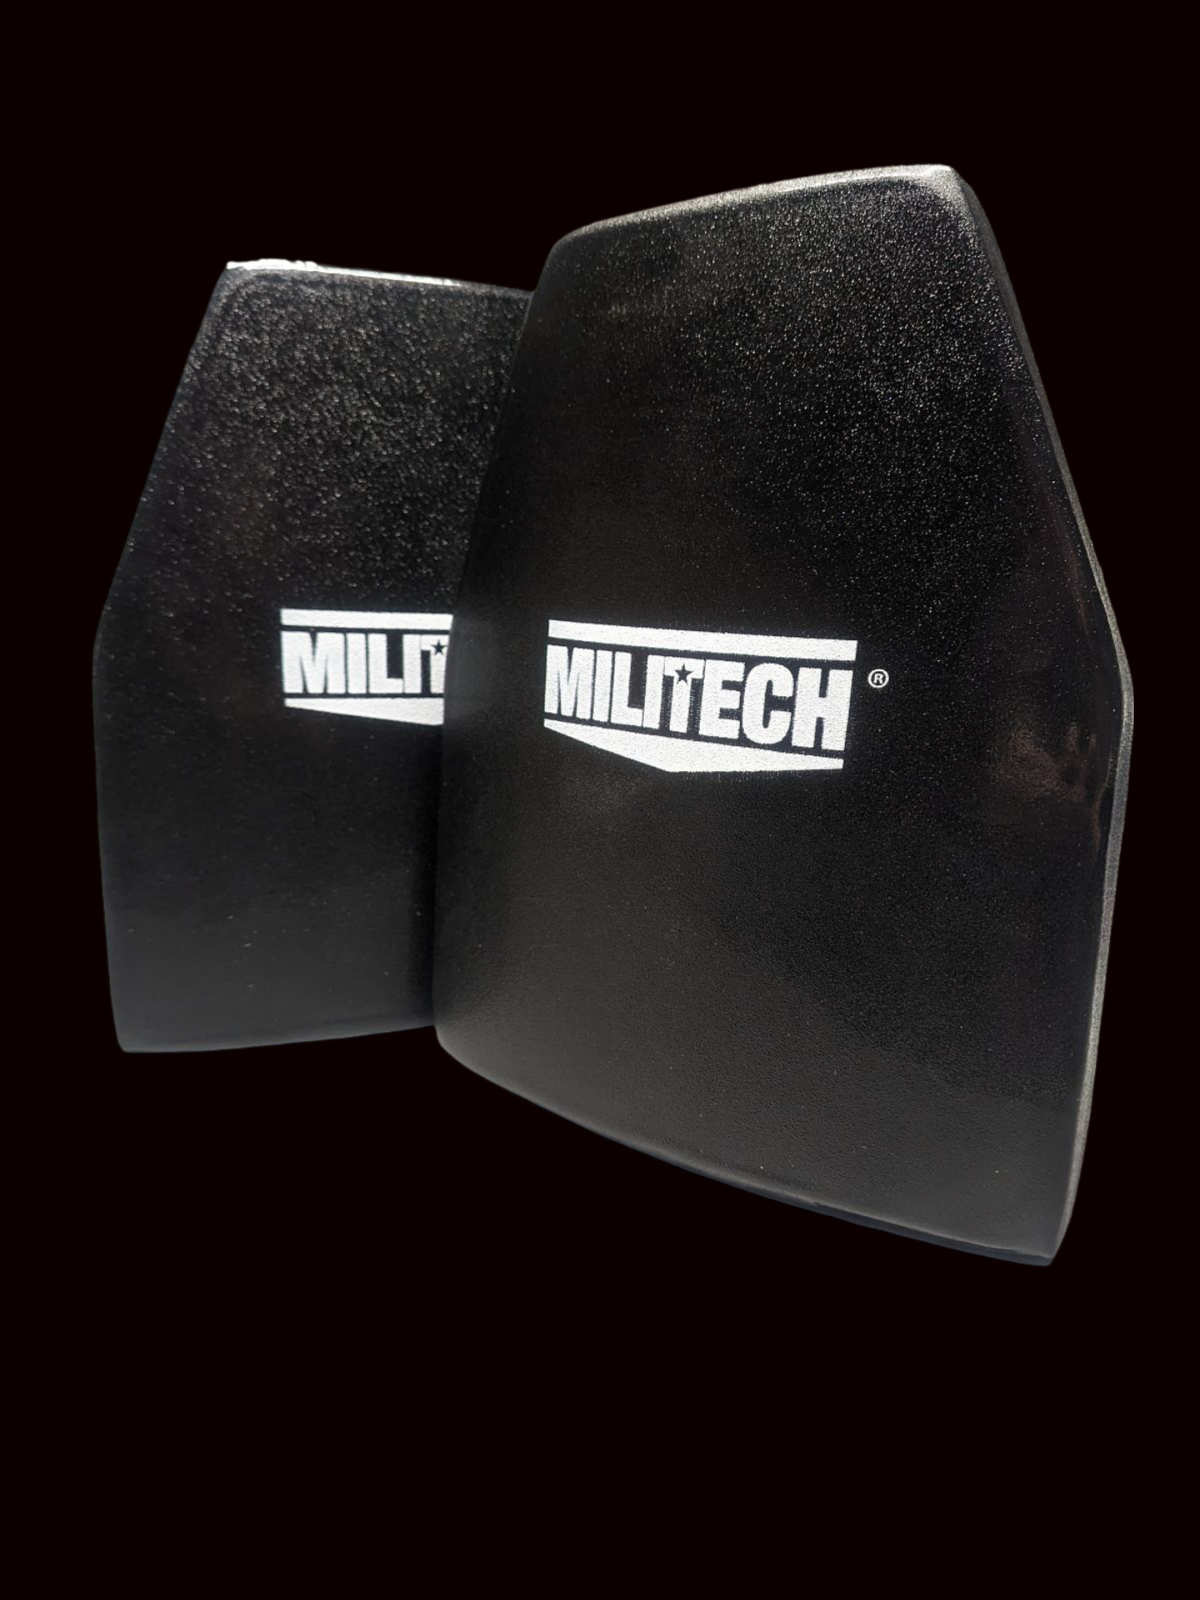 Militech Swimmer Cut Level IV 10x12 Plates (2 Plates Per Purchase)